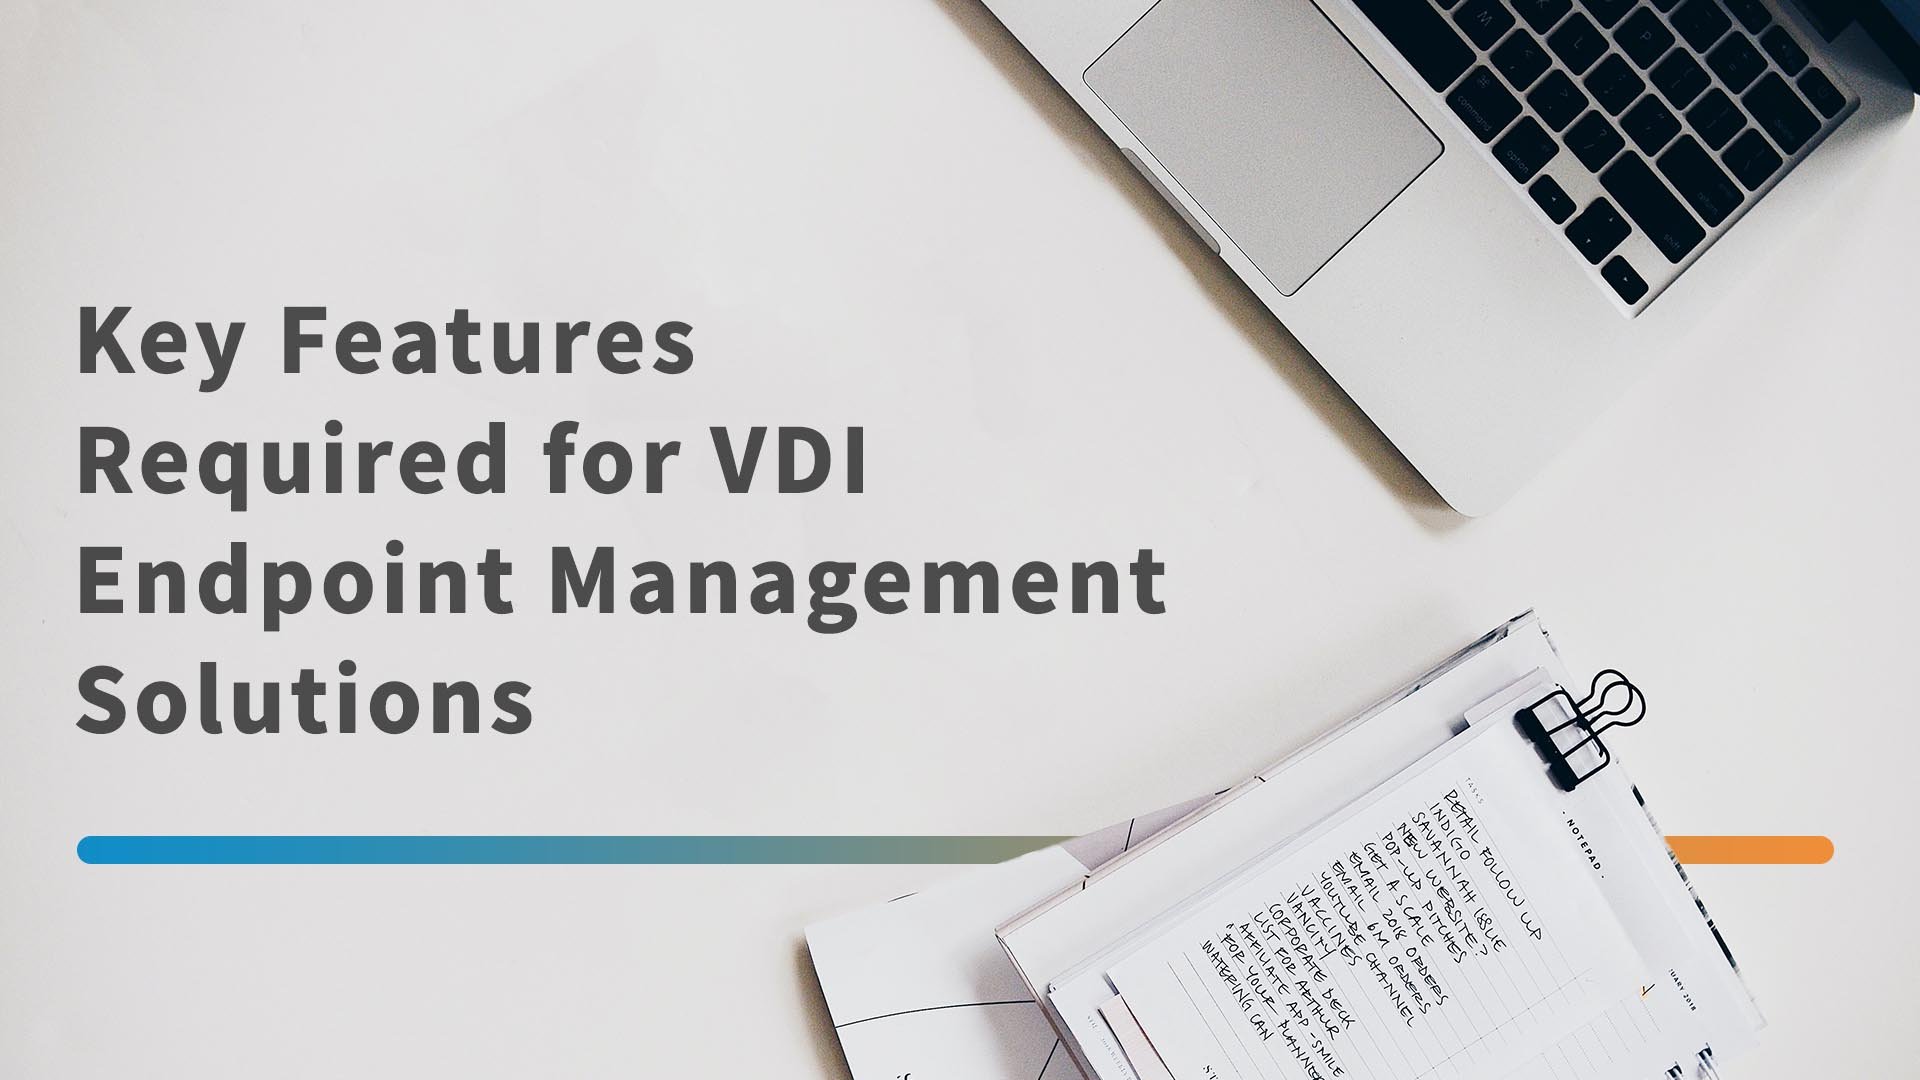 VDI endpoint management solution features